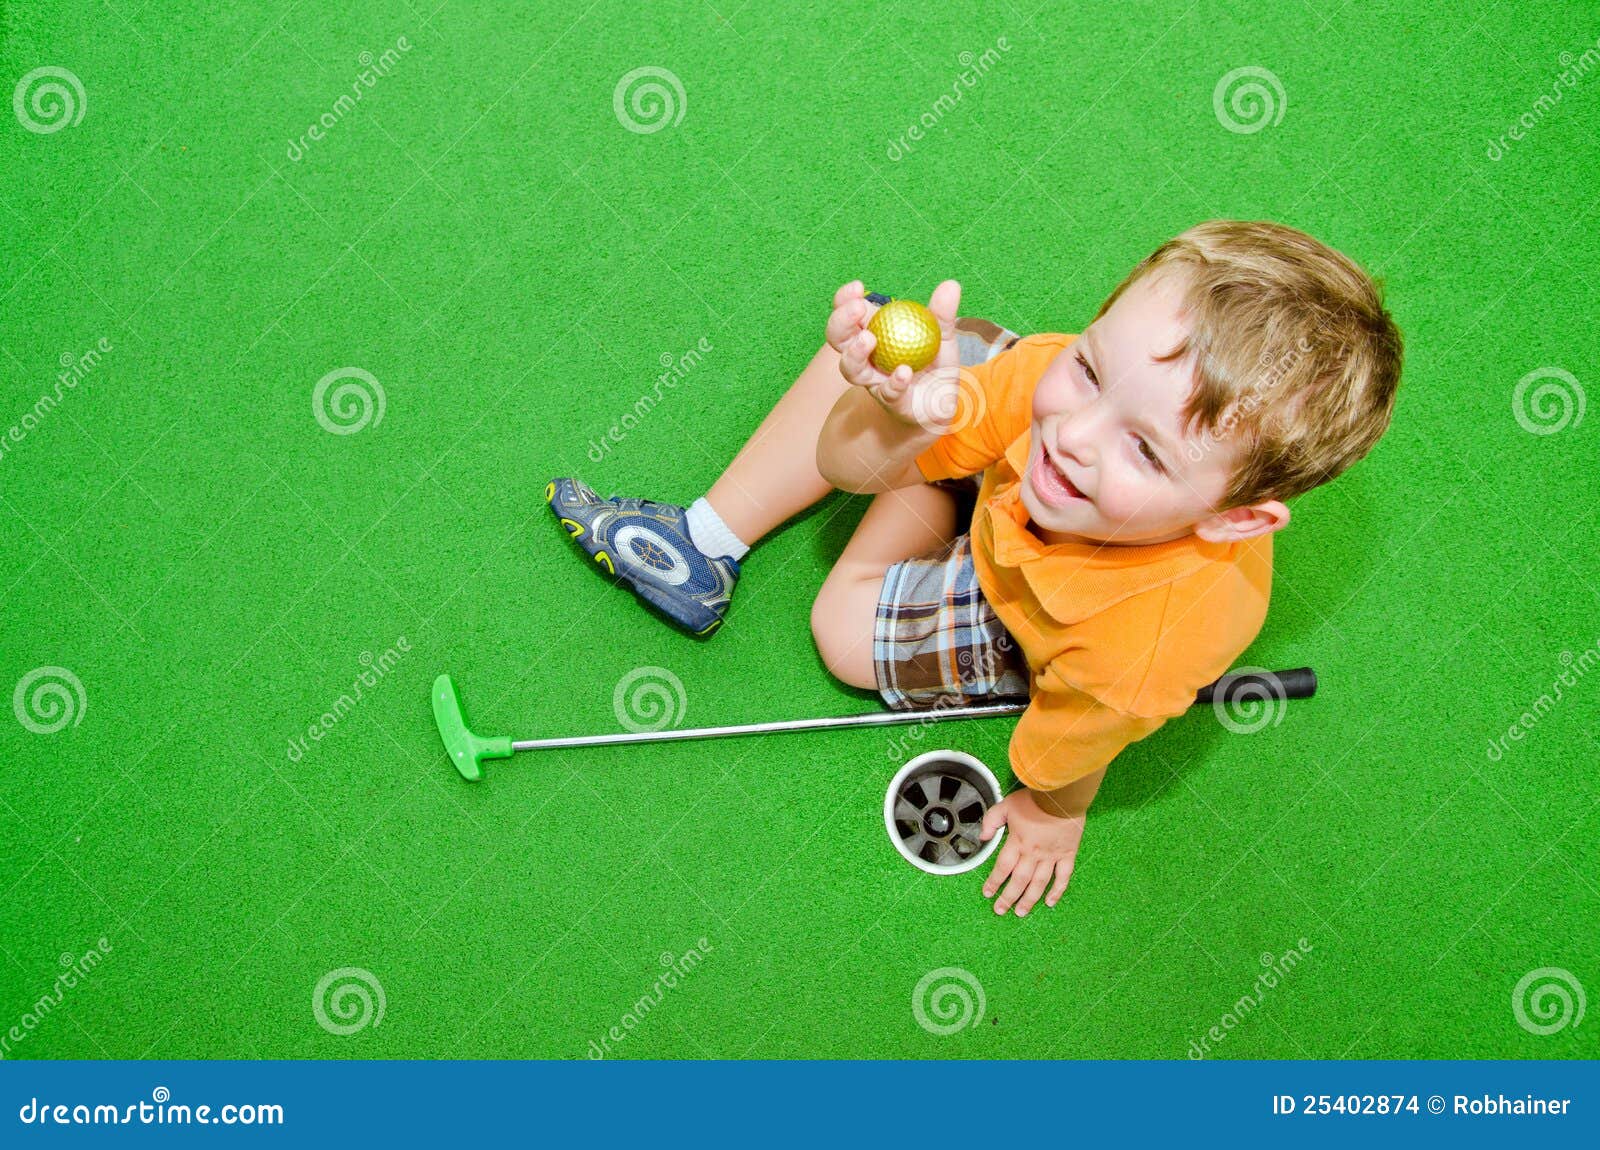 young boy plays mini golf